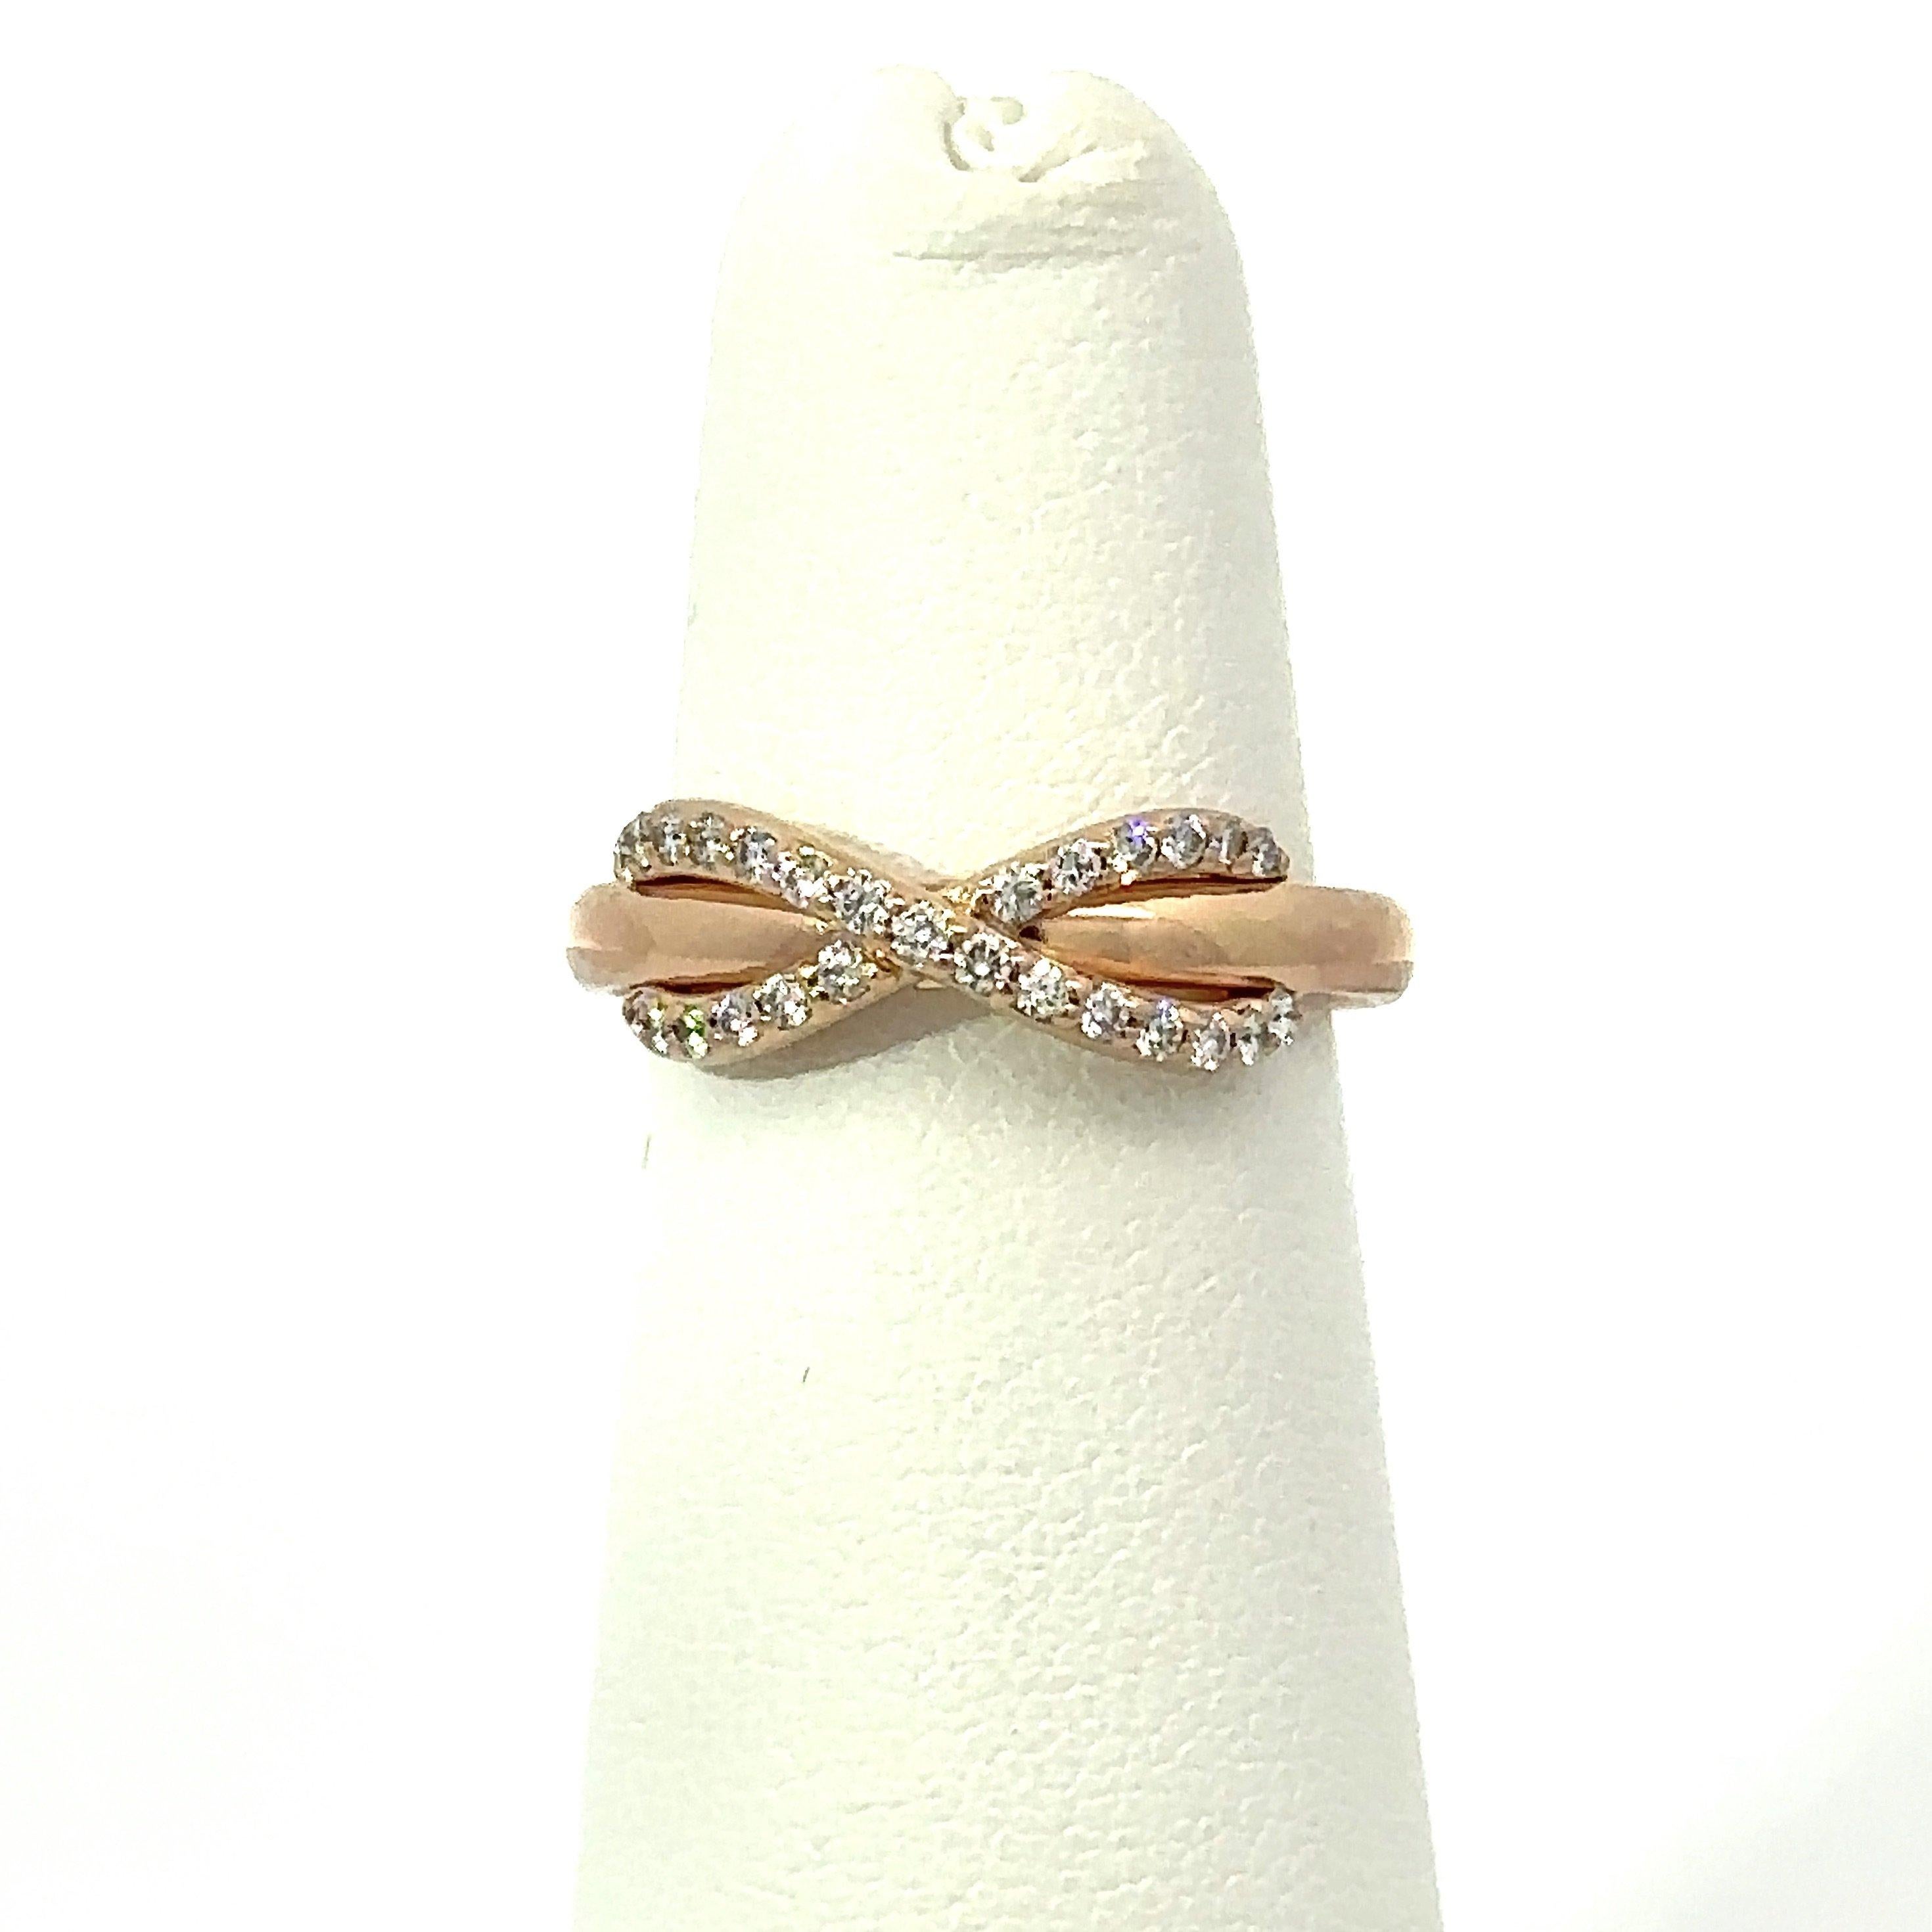 Contemporain Tiffany & Co. Bague Infinity en or rose 18 carats avec diamants